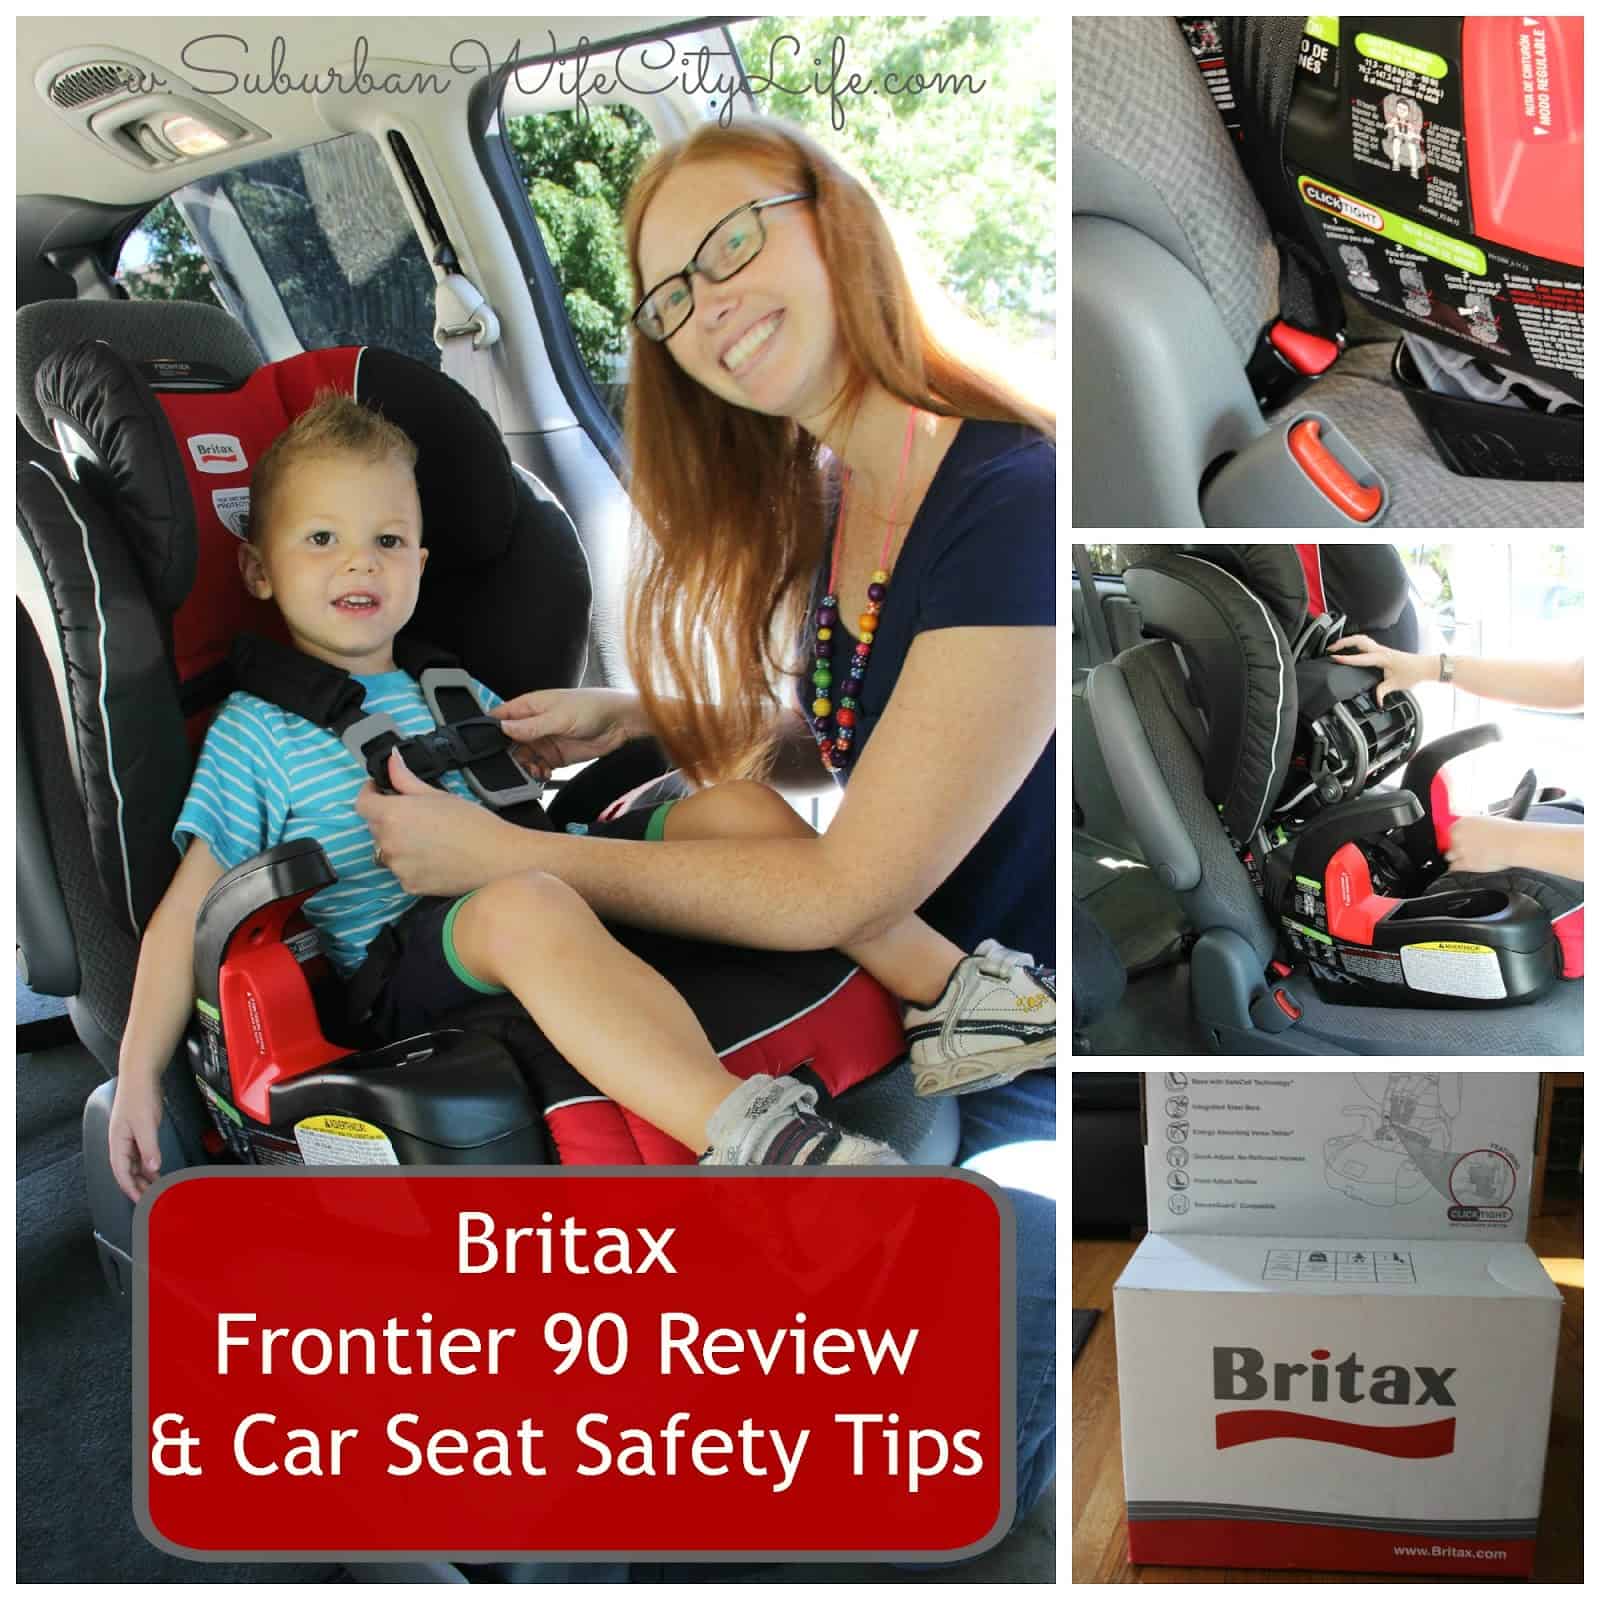 Car Seat Safety Info Britax Frontier, Britax Frontier 90 Car Seat Expiration